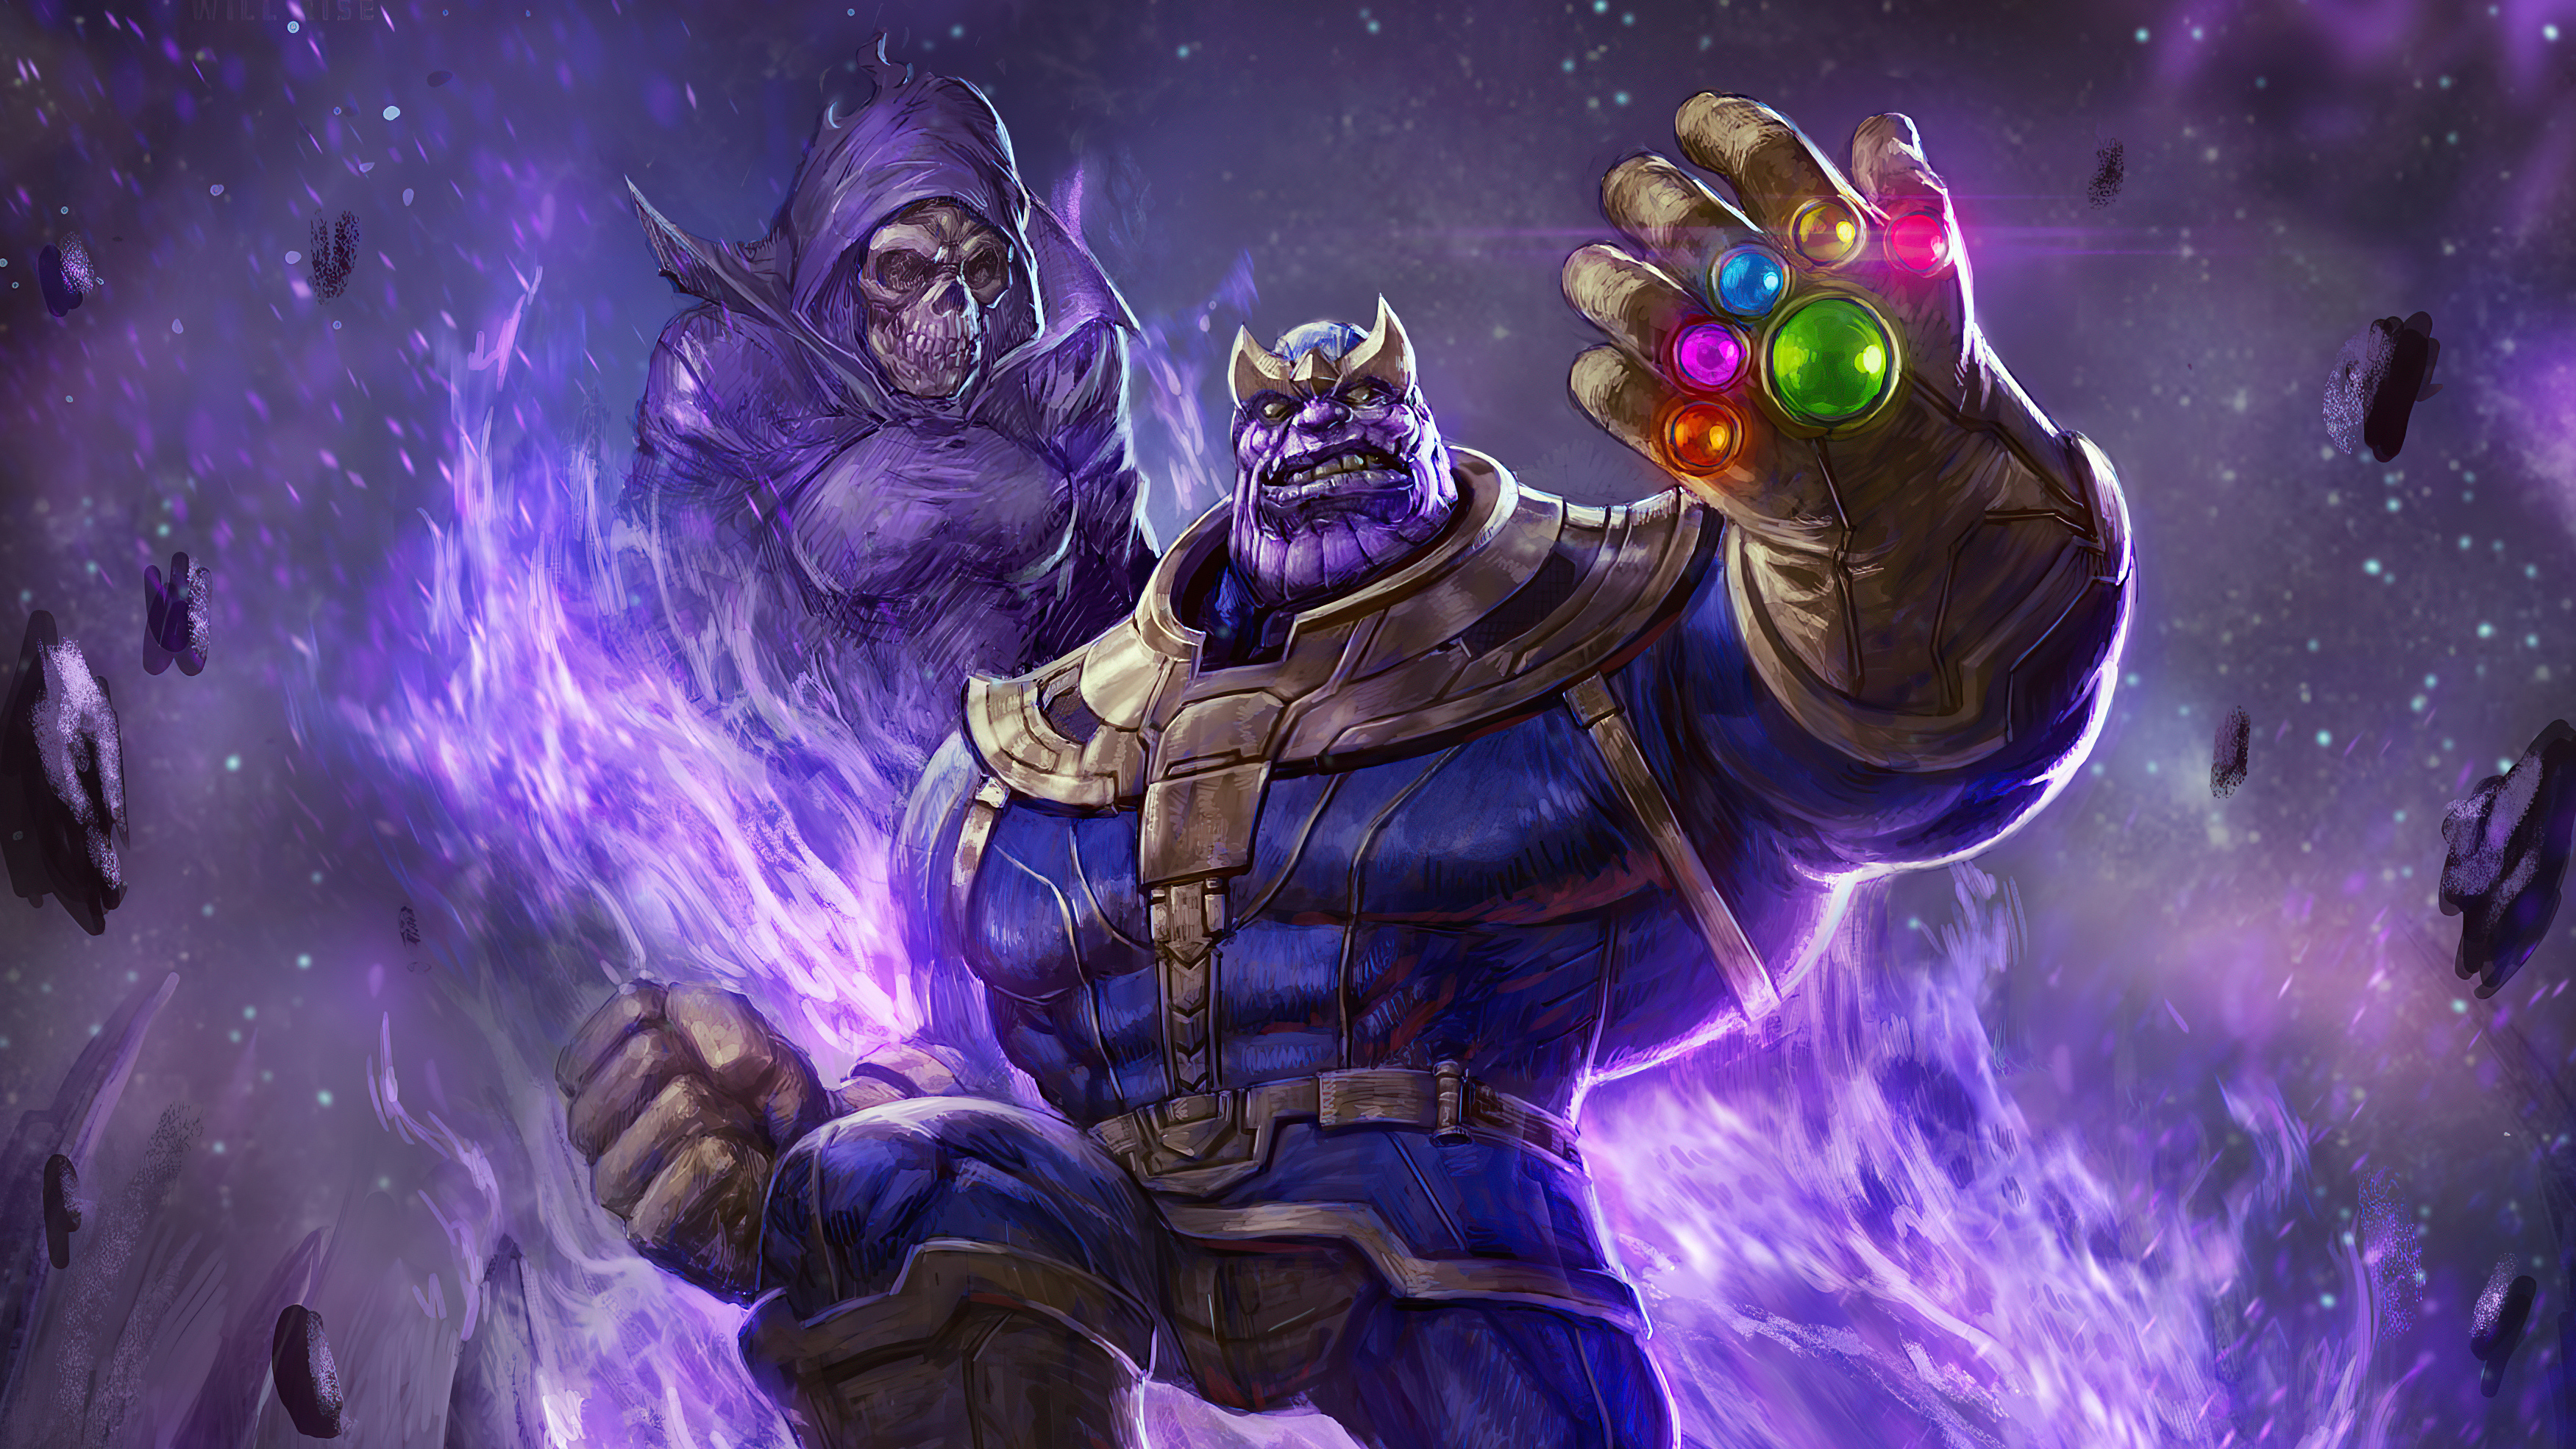 Thanos HD Wallpaper by Leroy Fernandes